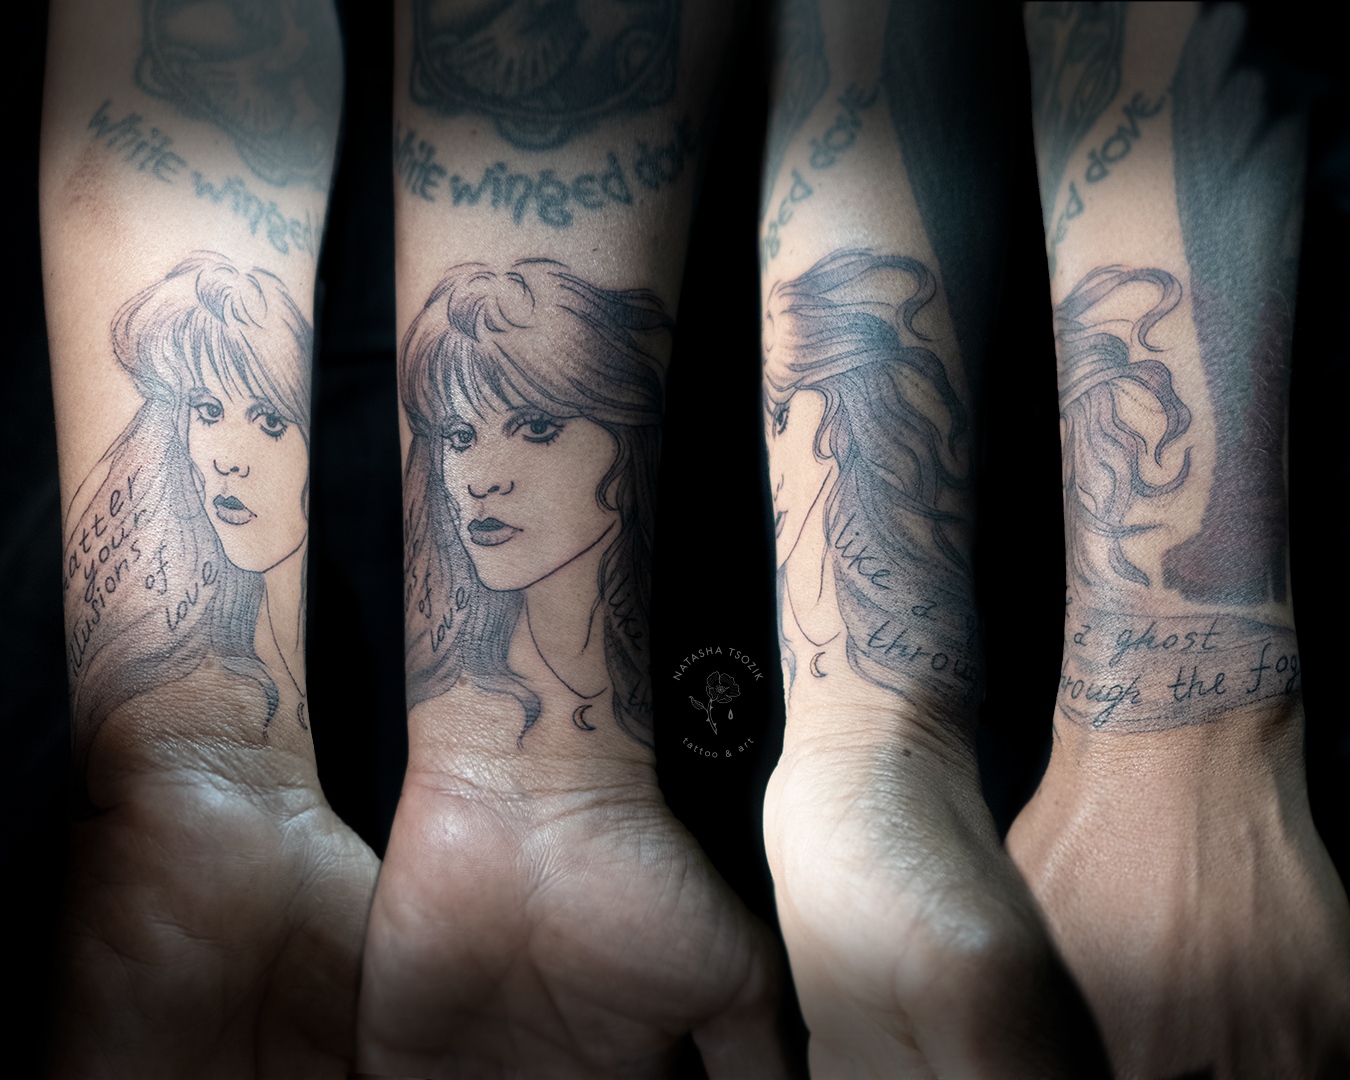 Stevie Nicks portrait tattoo on a forearm.